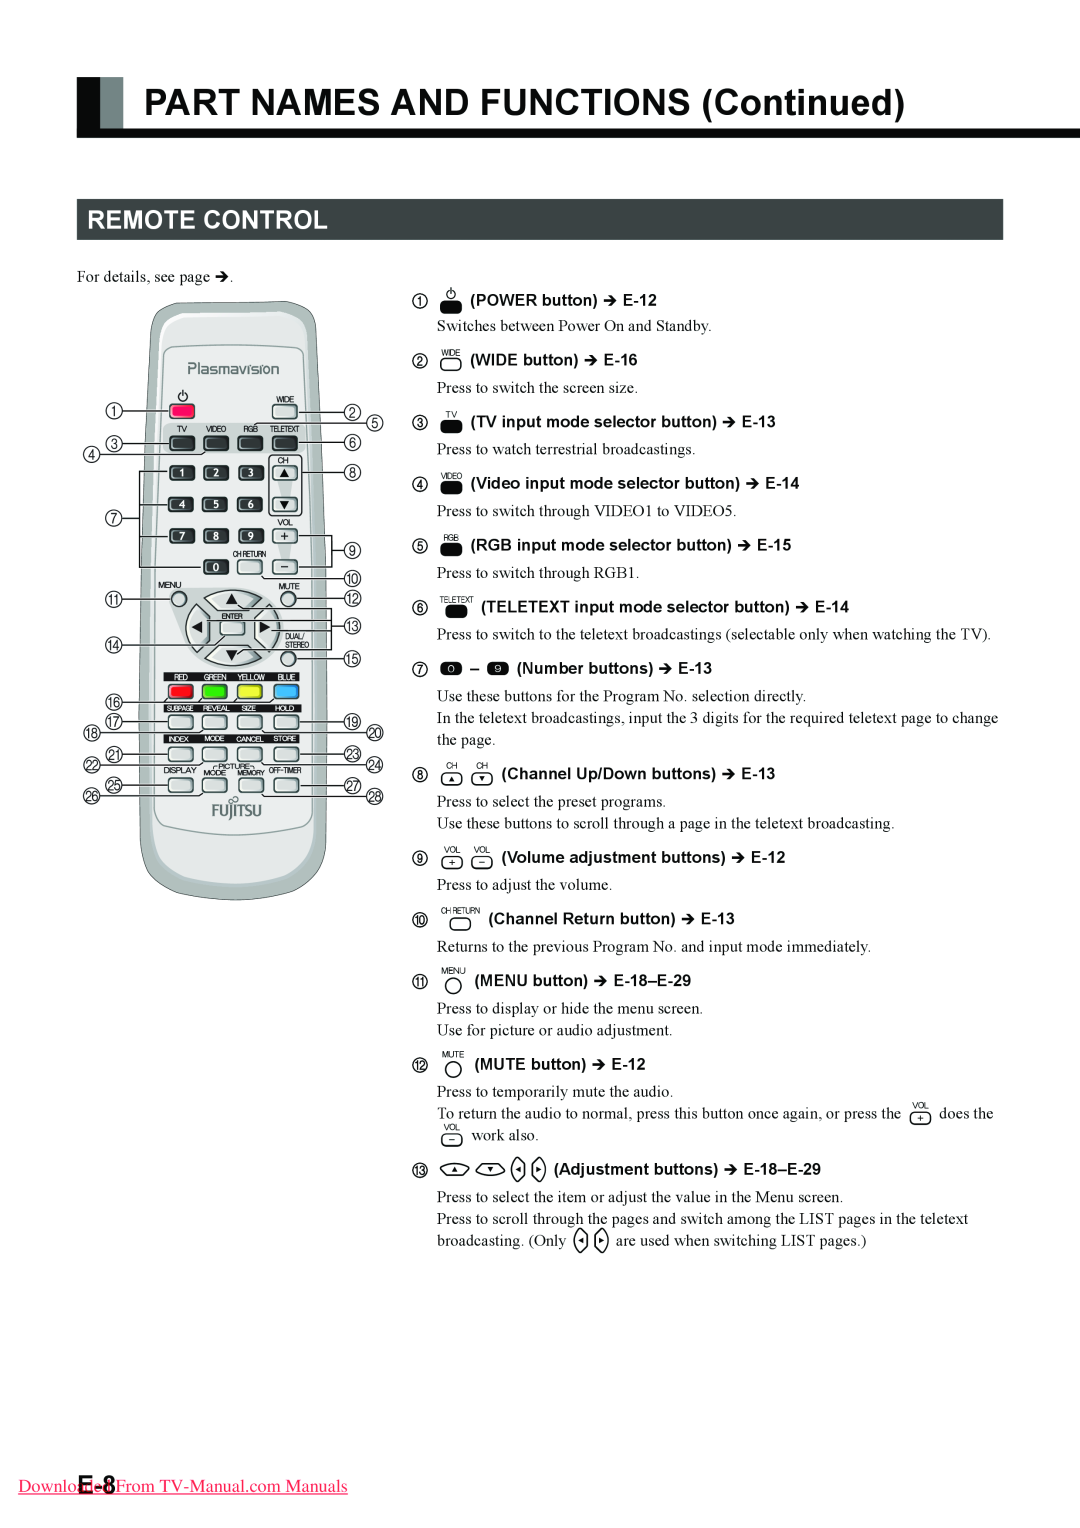 Fujitsu P42HTA51E SERIES PART NAMES AND FUNCTIONS Continued, Remote Control, DownloadedE-8From TV-Manual.com Manuals 